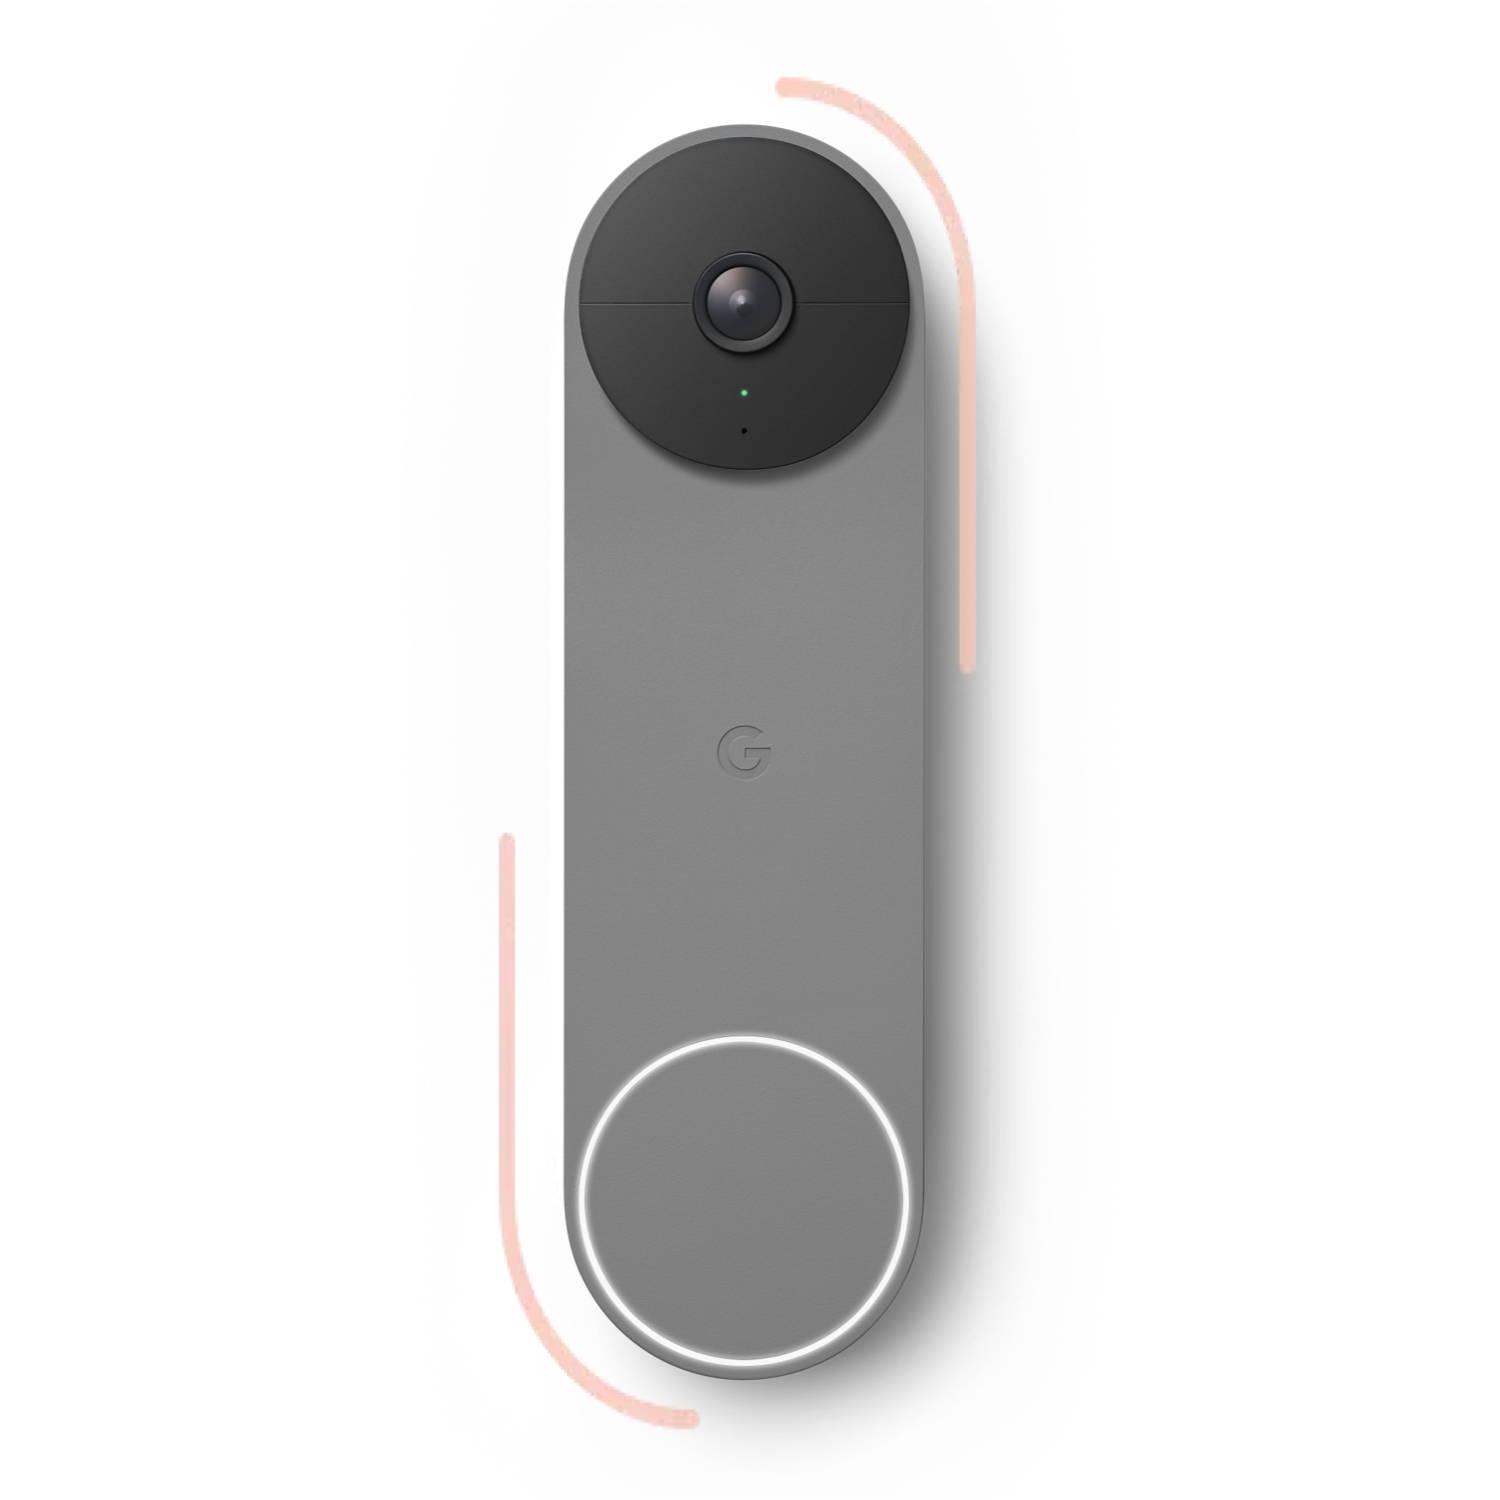 Google Nest video thermostat